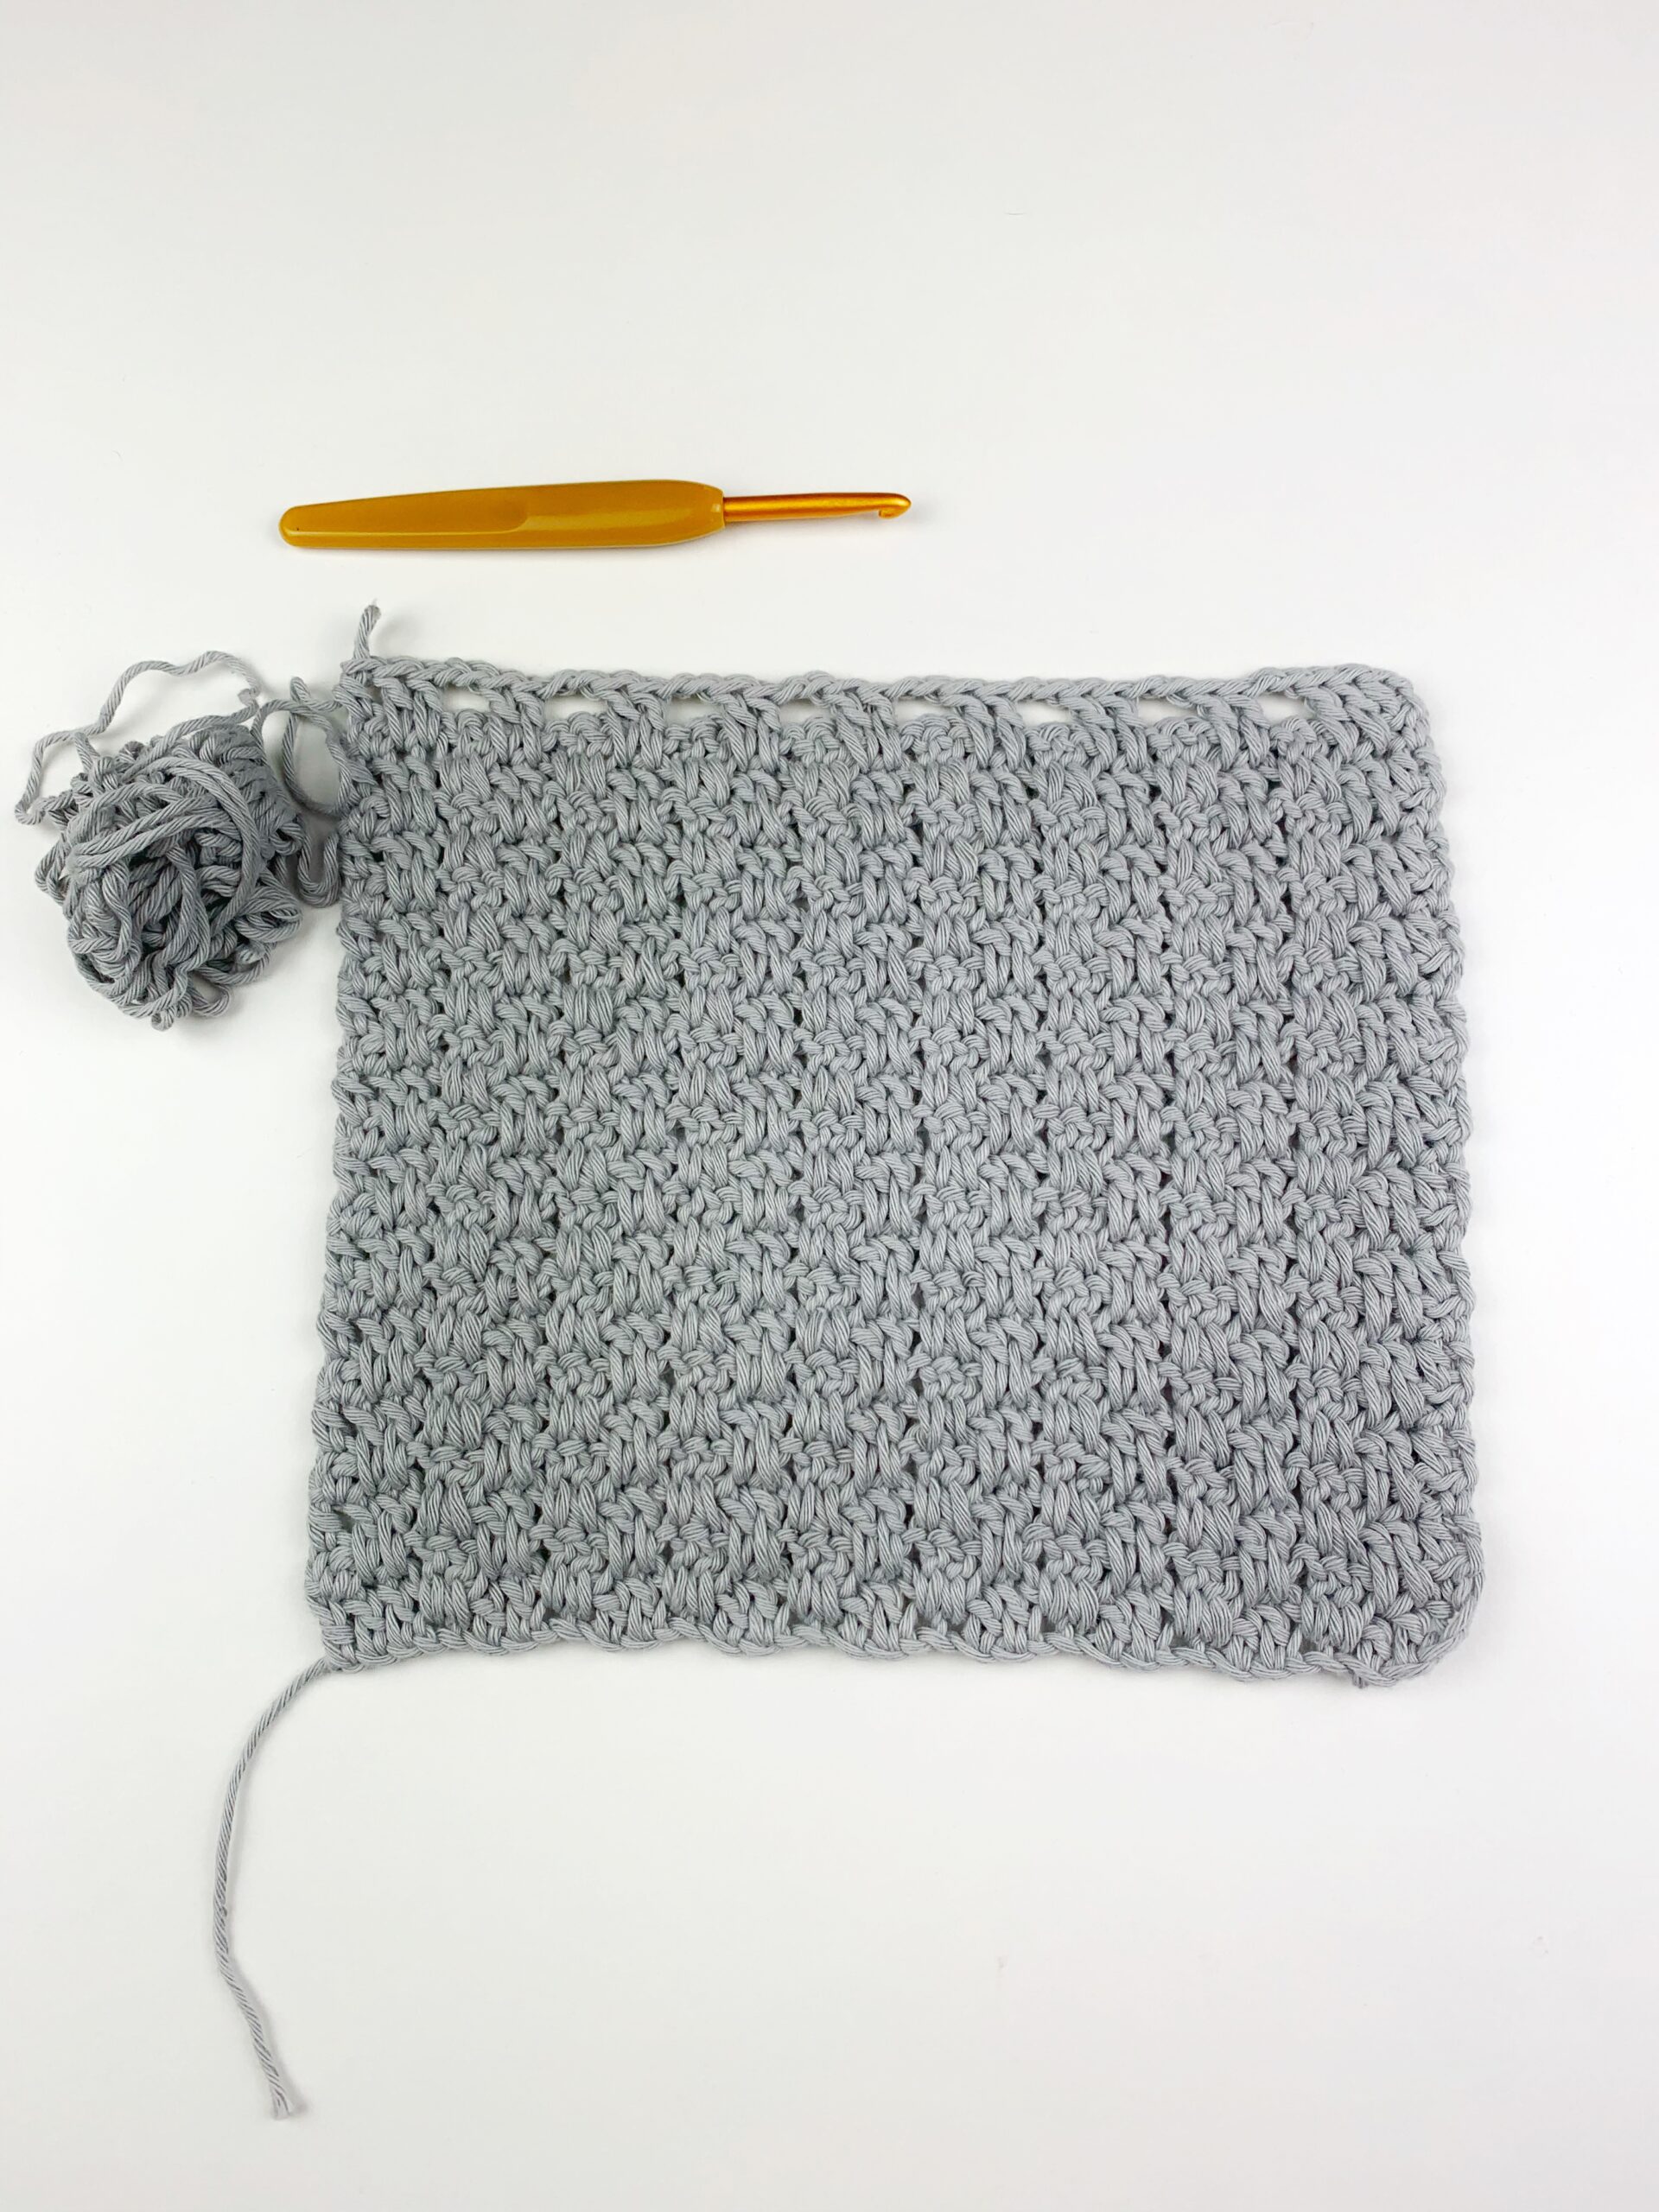 Crochet the Bloque Stitch